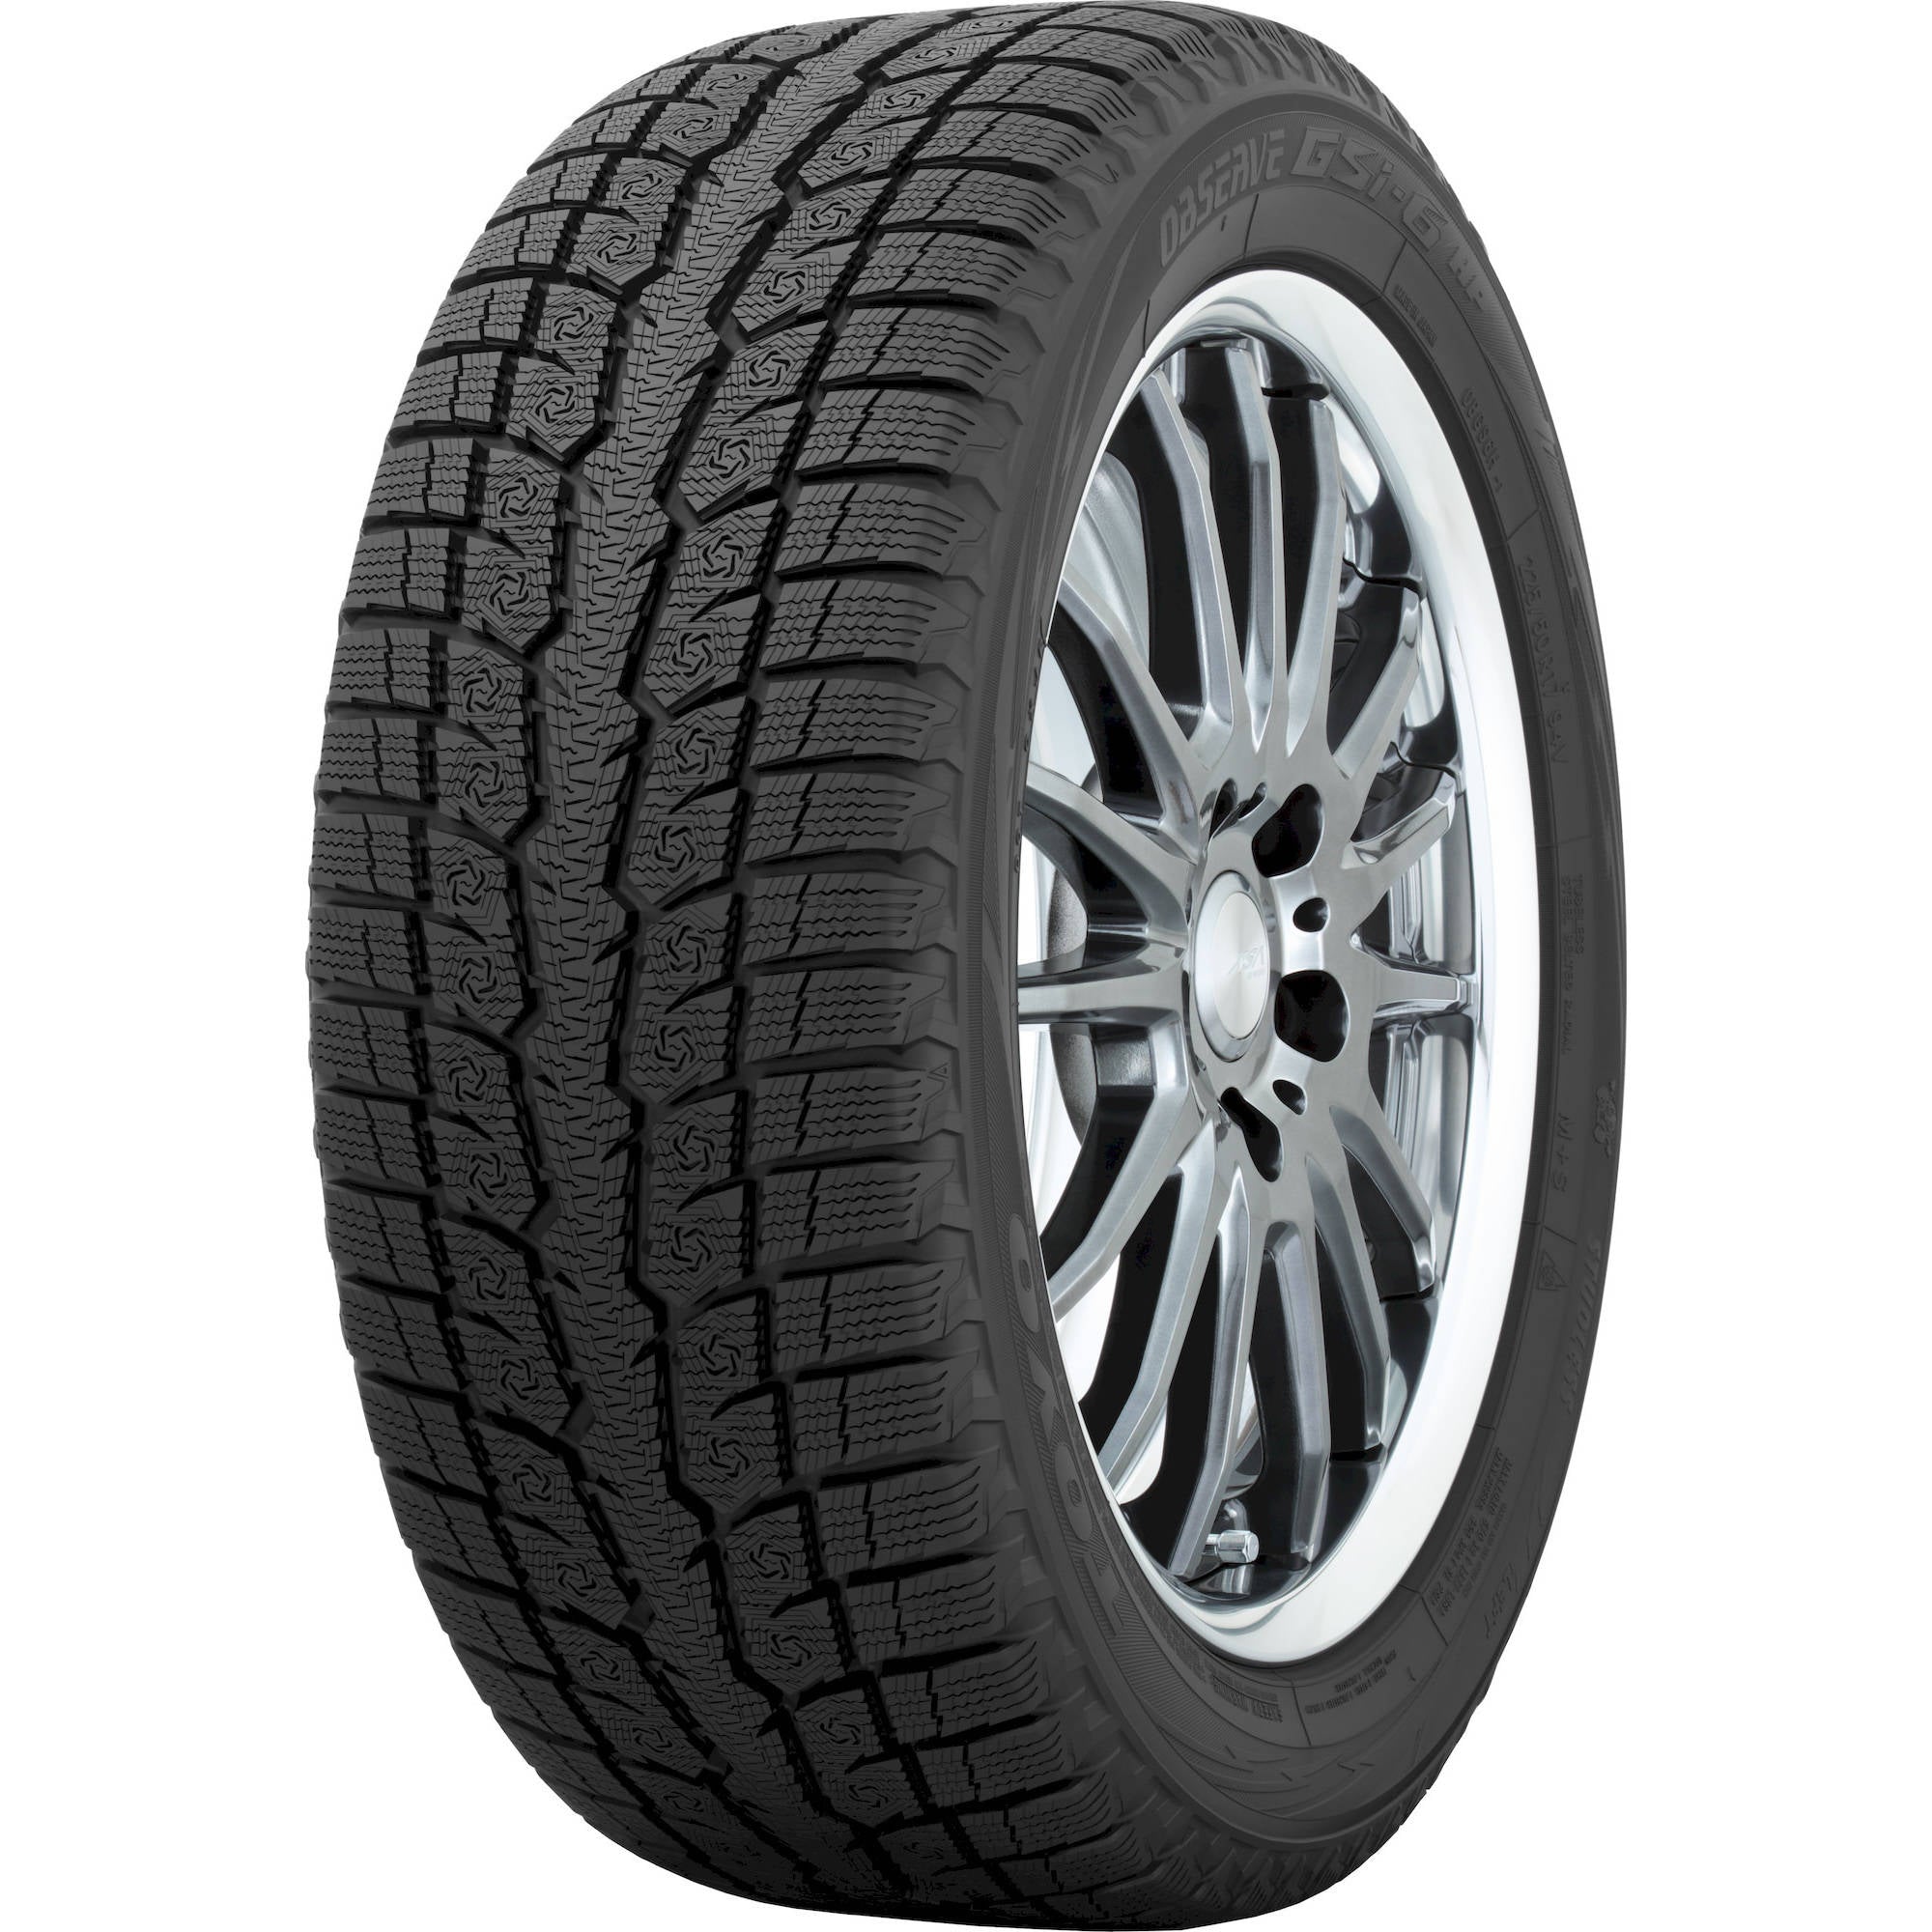 TOYO TIRES OBSERVE GSI-6 215/55R16XL (25.3X8.5R 16) Tires